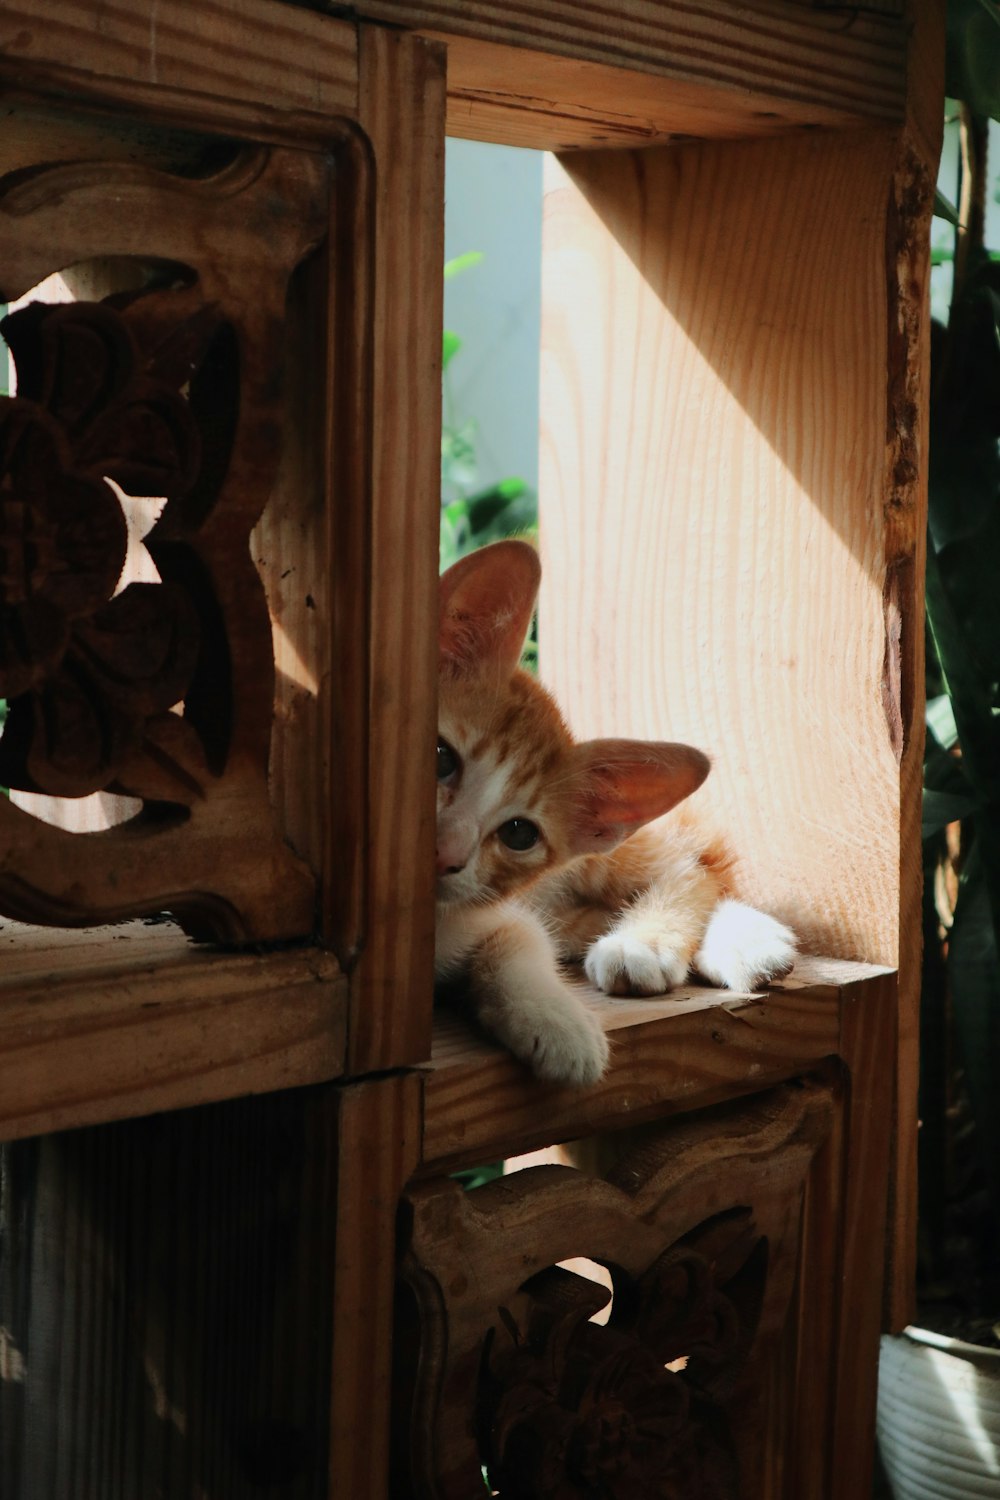 a cat sitting on a wooden shelf